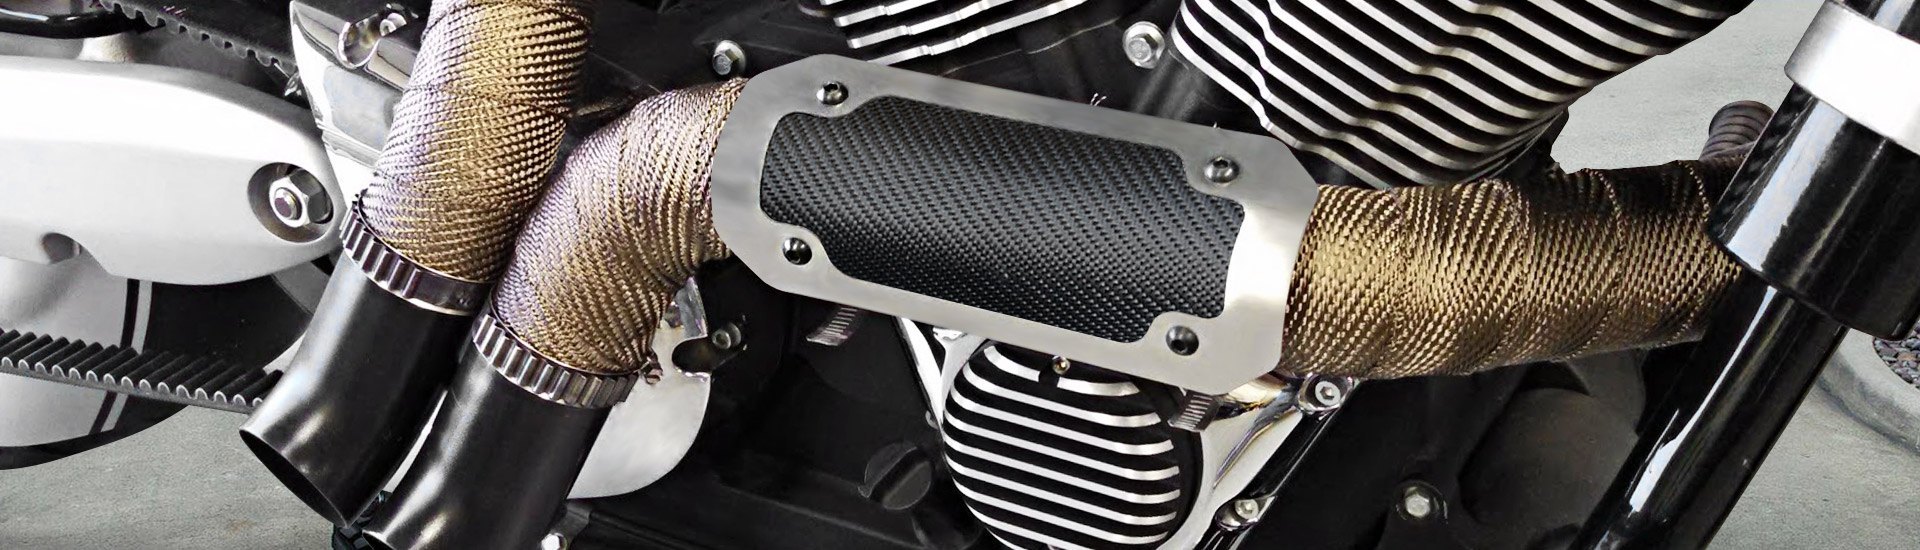 Smoke ECLEAR Saddle Shield Heat Deflector For Harley Touring Electra Glide Trike 2009-2015